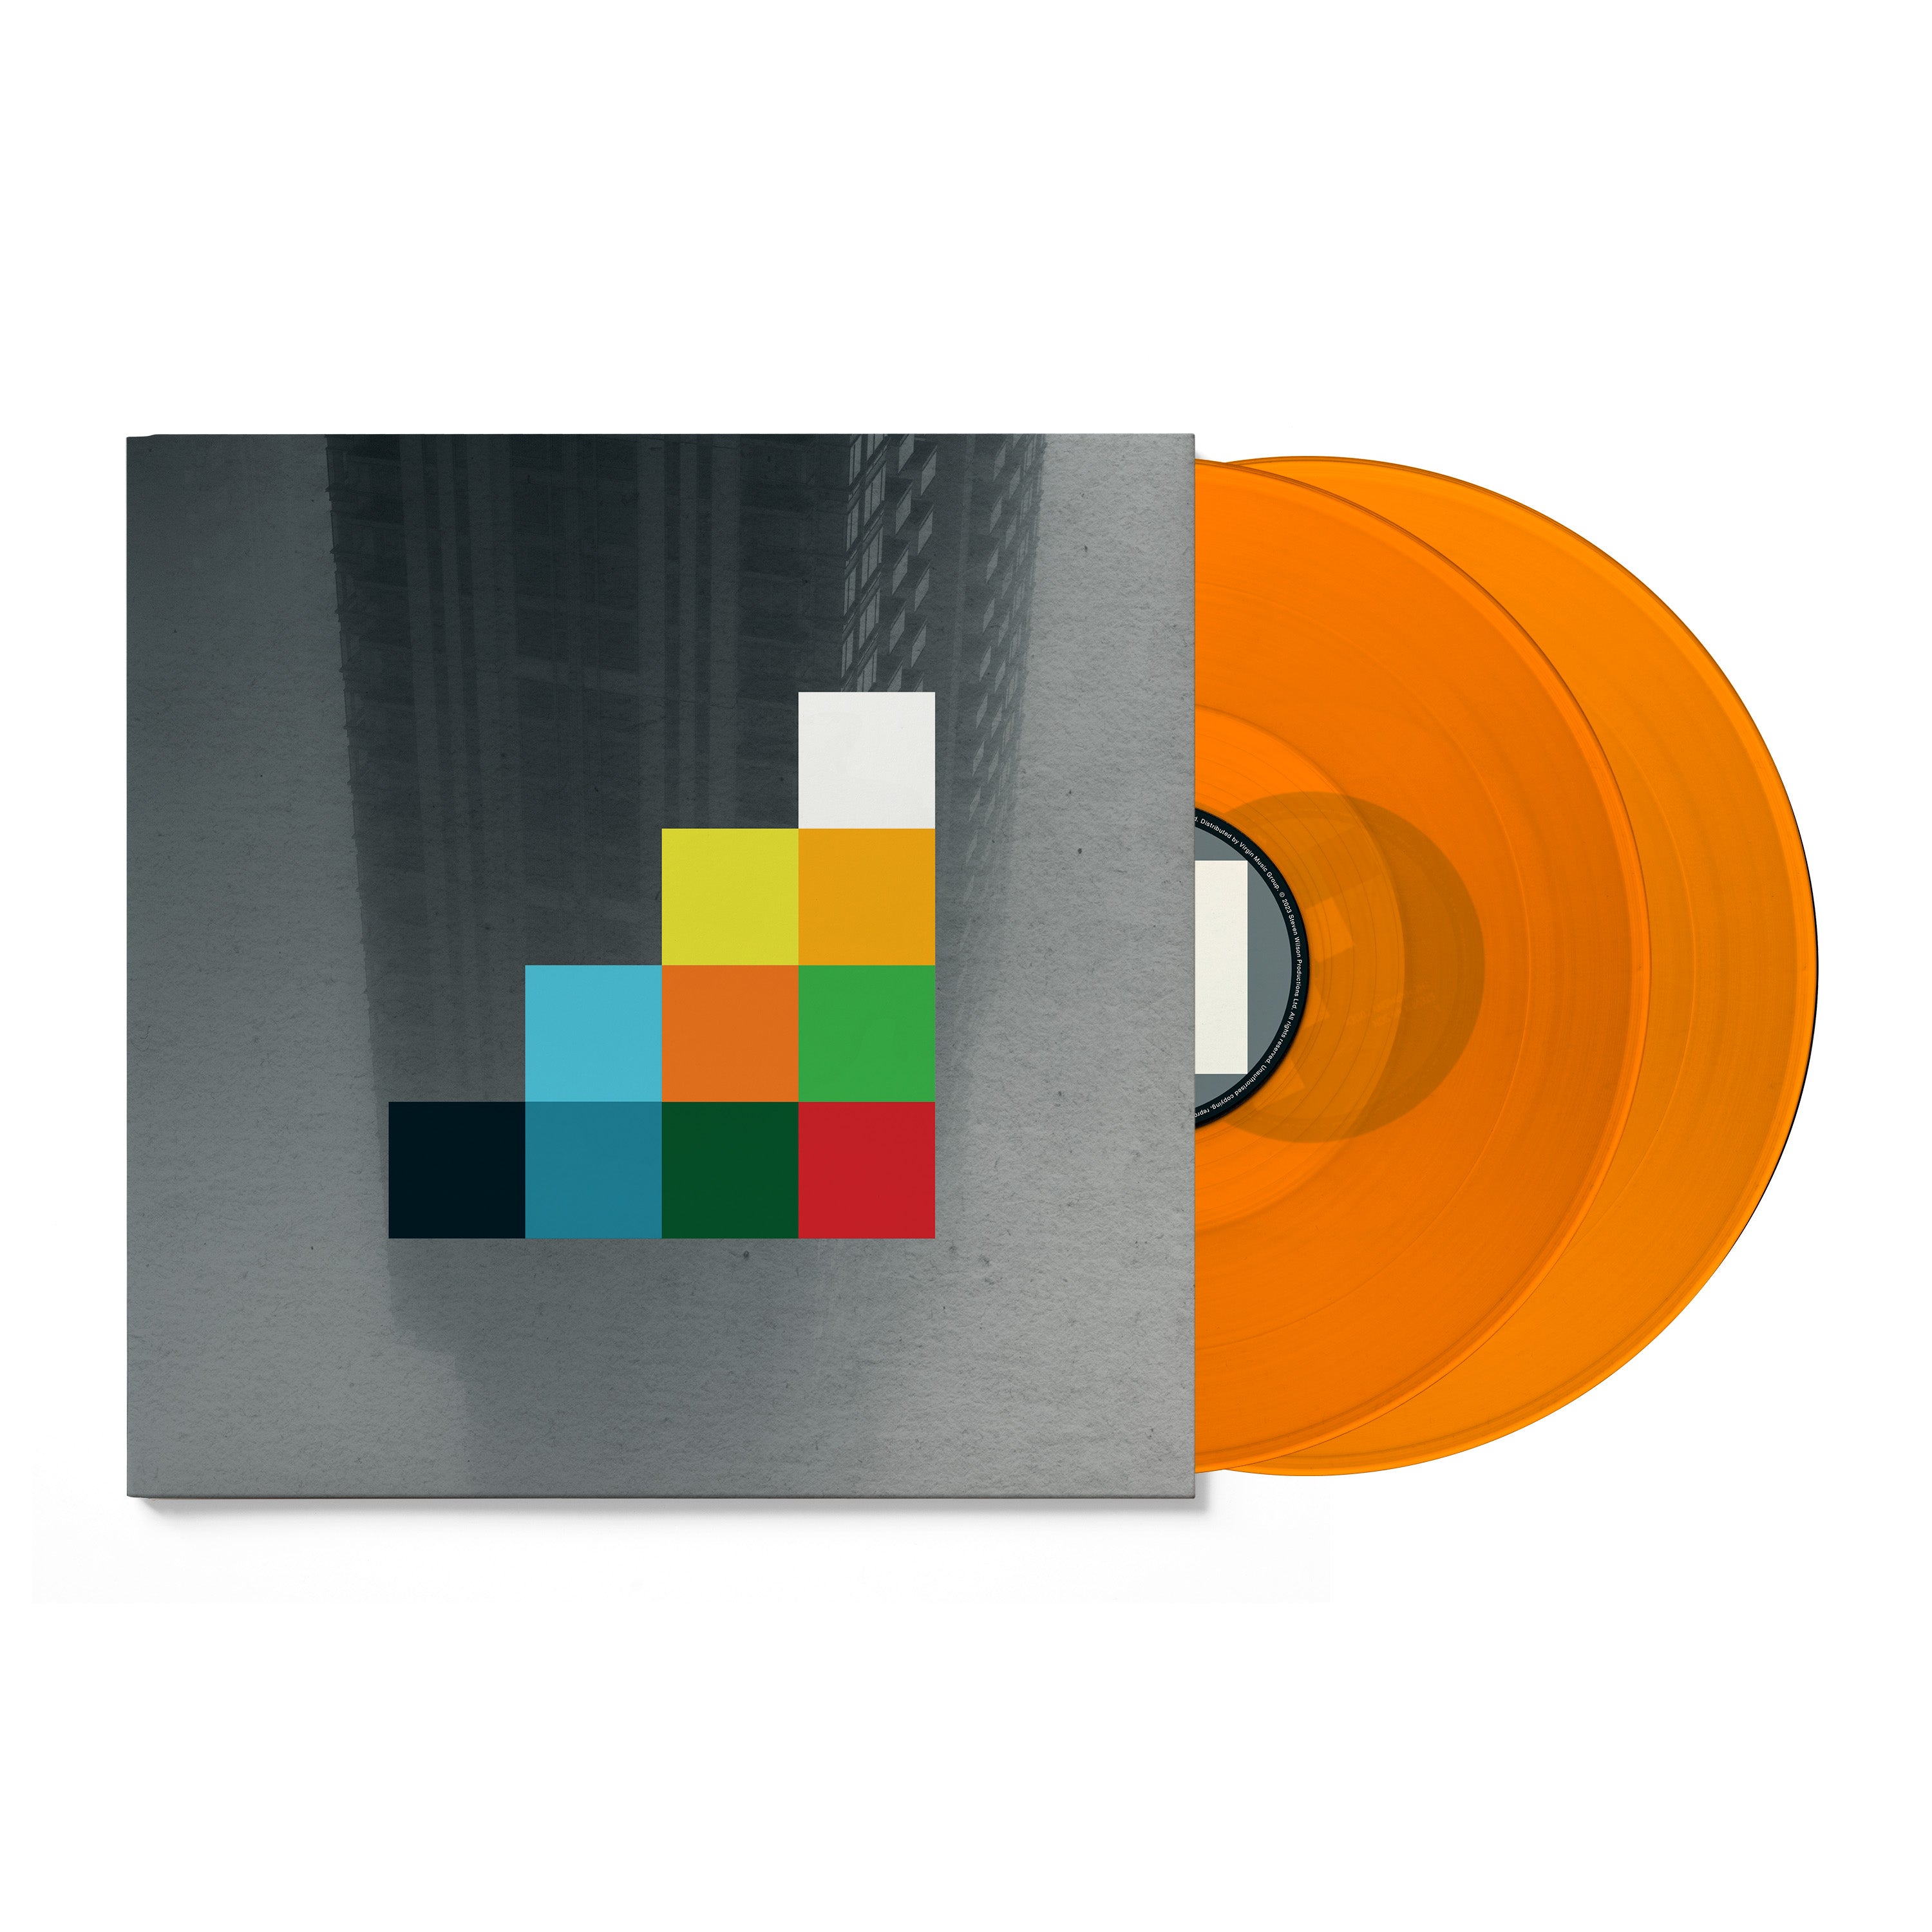 Steven Wilson - The Harmony Codex: Limited Orange Vinyl 2LP